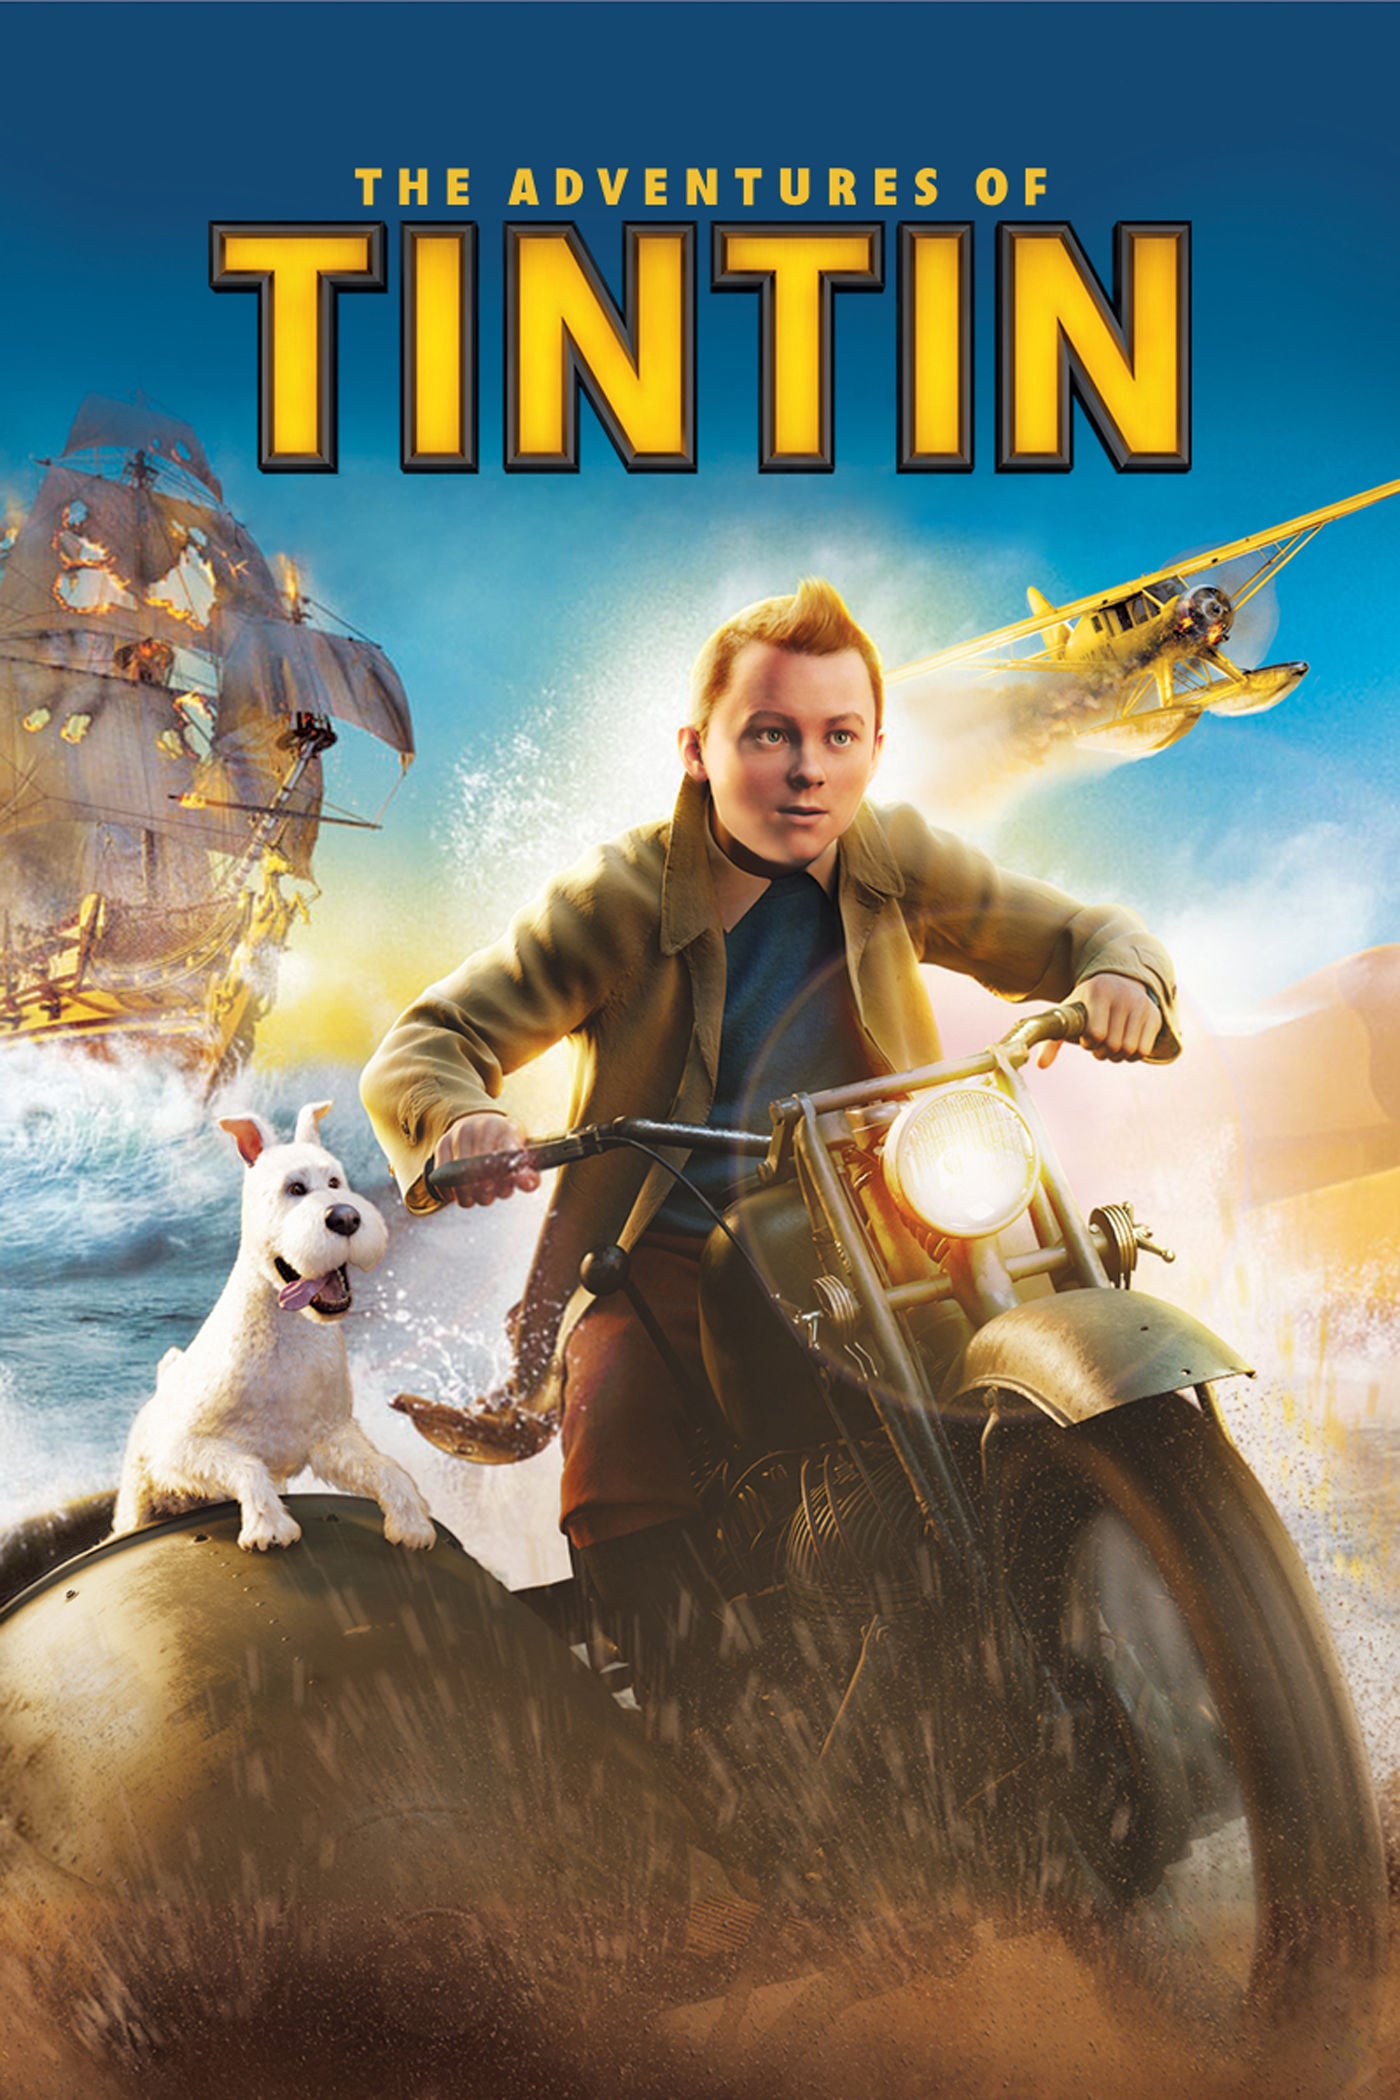 Caratula de THE ADVENTURES OF TINTIN: THE SECRET OF THE UNICORN (Las aventuras de Tintin el secreto del unicornio) 